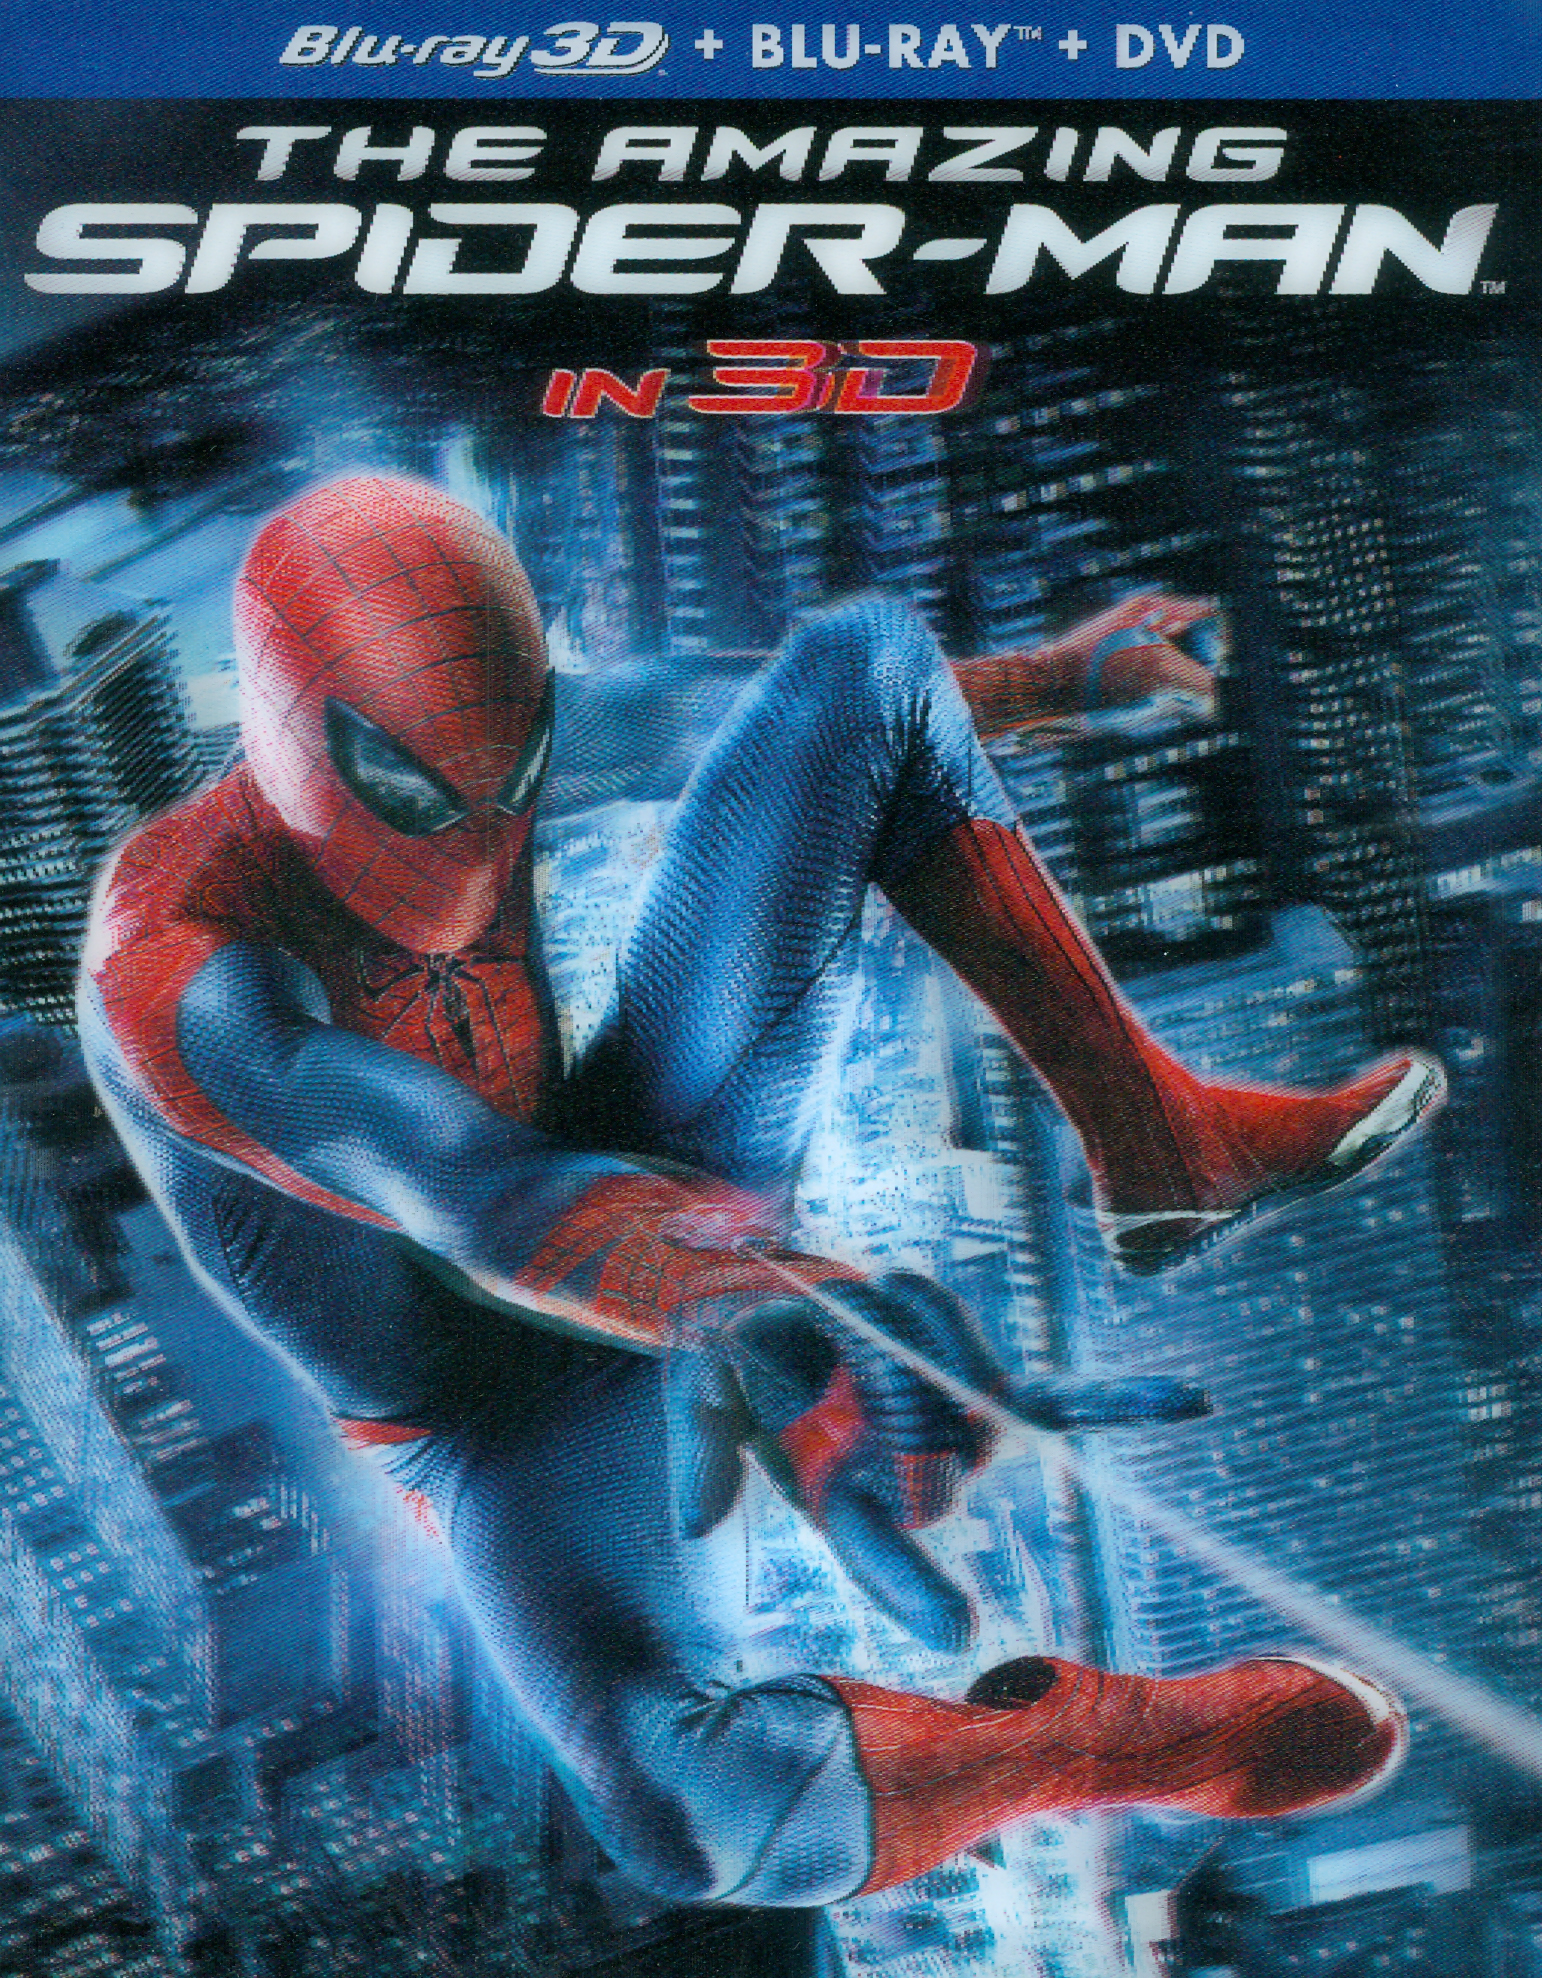 The Amazing Spider-Man [4 Discs] [Includes Digital Copy] [3D] [Blu-ray/DVD]  [Blu-ray/Blu-ray 3D/DVD] [2012] - Best Buy